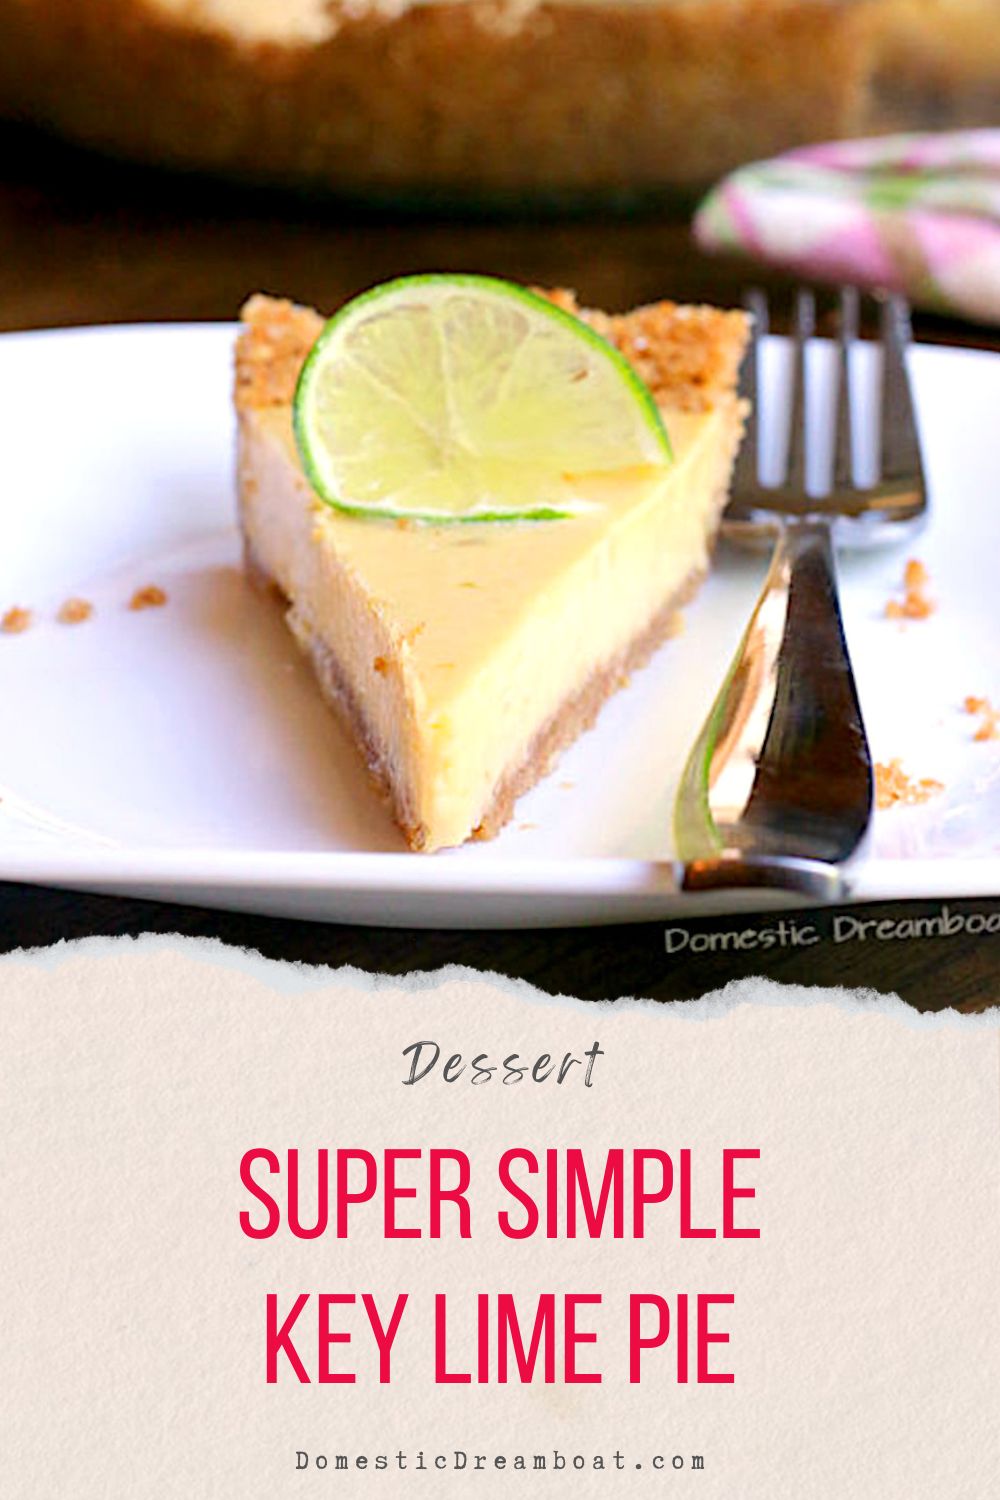 Super Simple Key Lime Pie